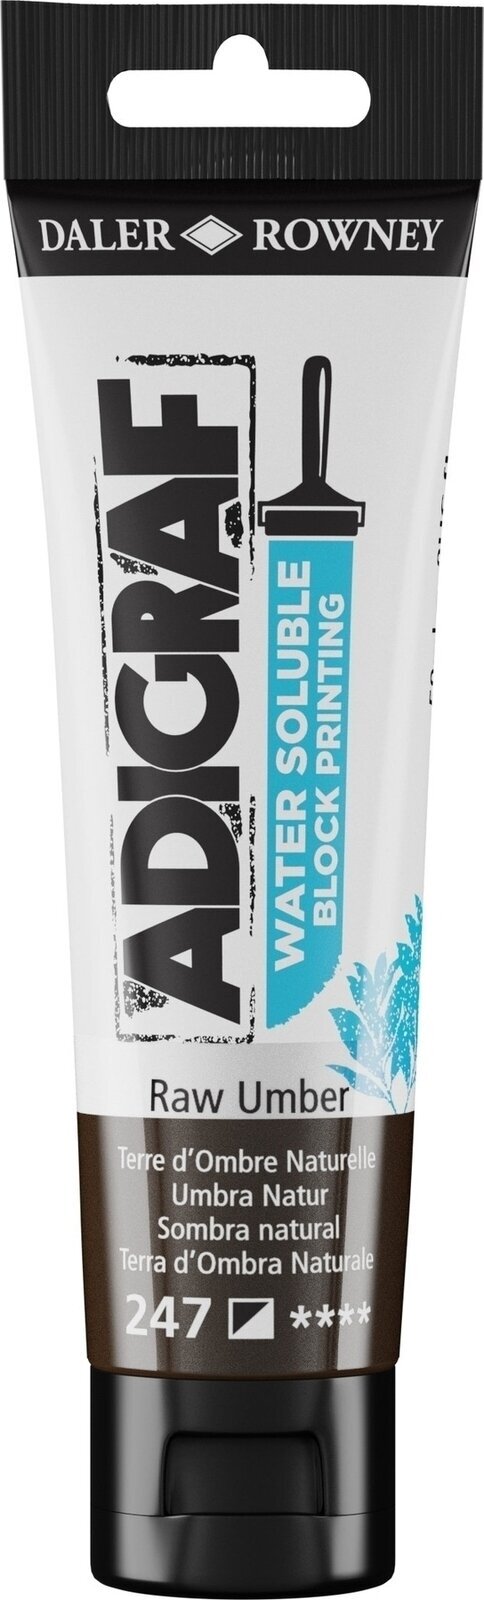 Tinta para linogravura Daler Rowney Adigraf Block Printing Water Soluble Colour Tinta para linogravura Raw Umber 59 ml